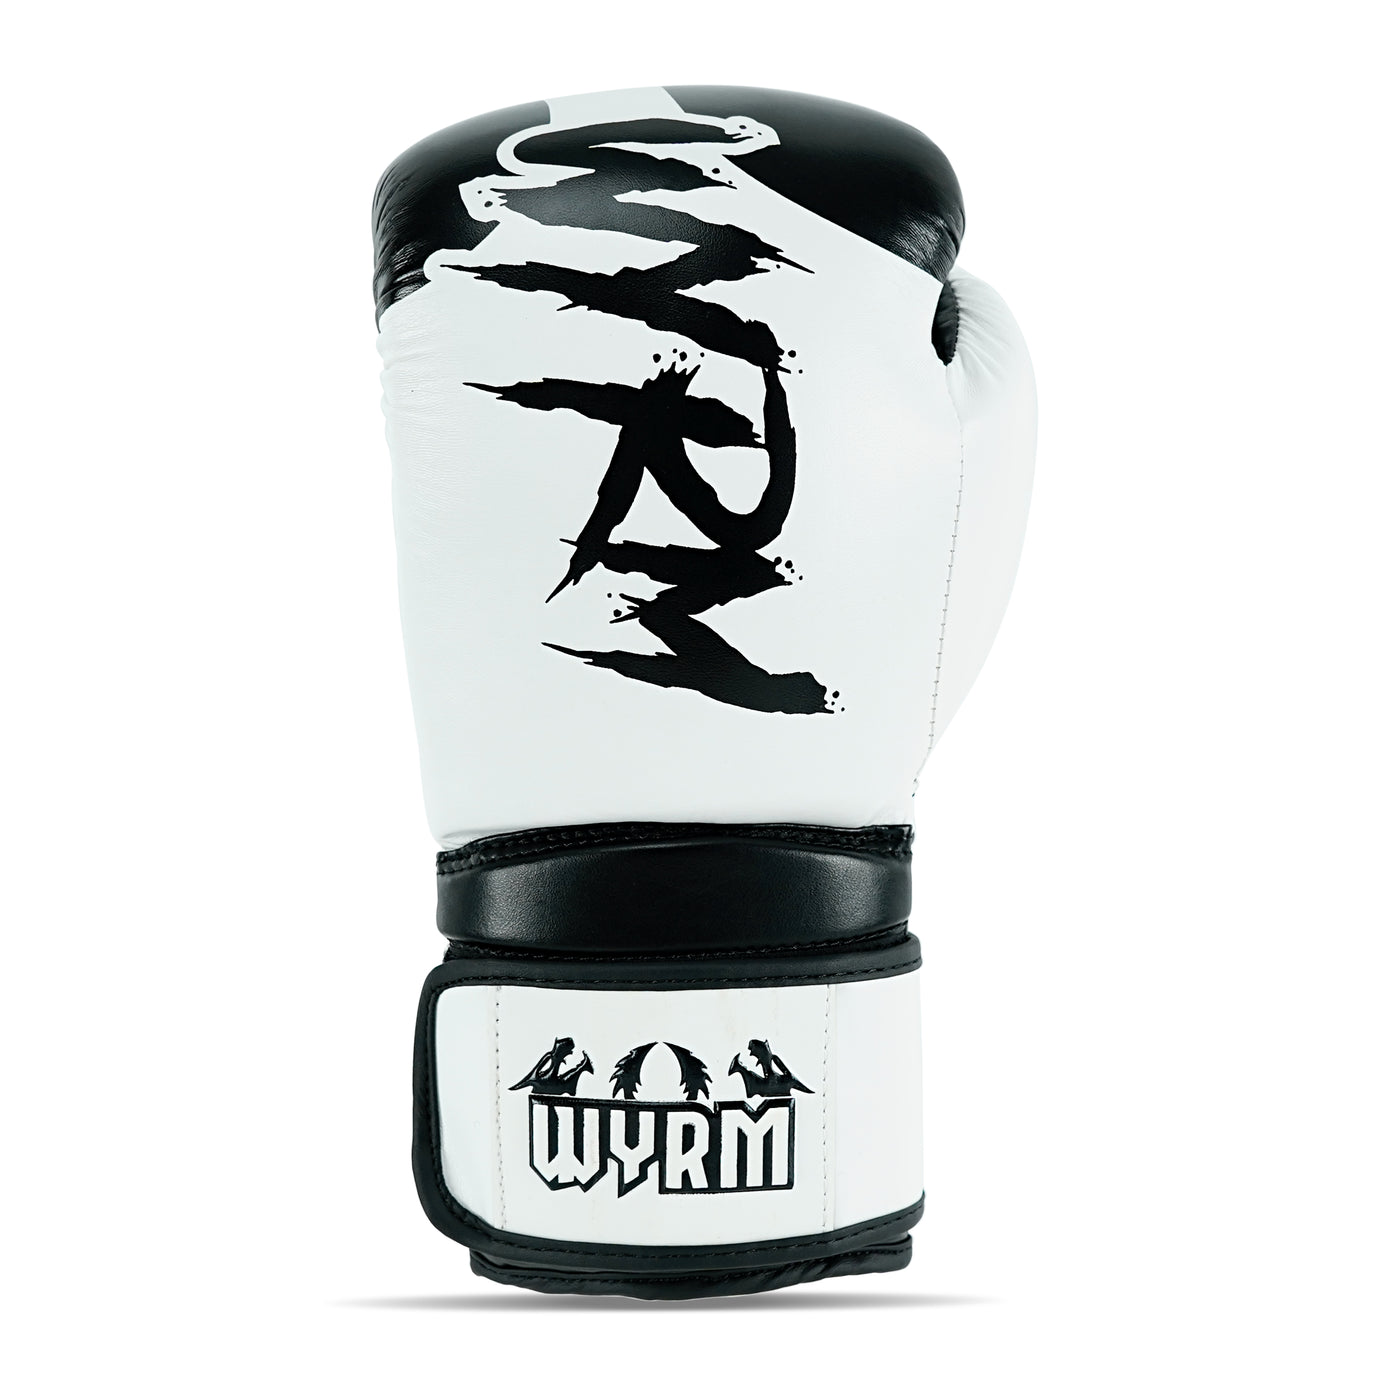 Matador White/Black Leather Boxing Gloves